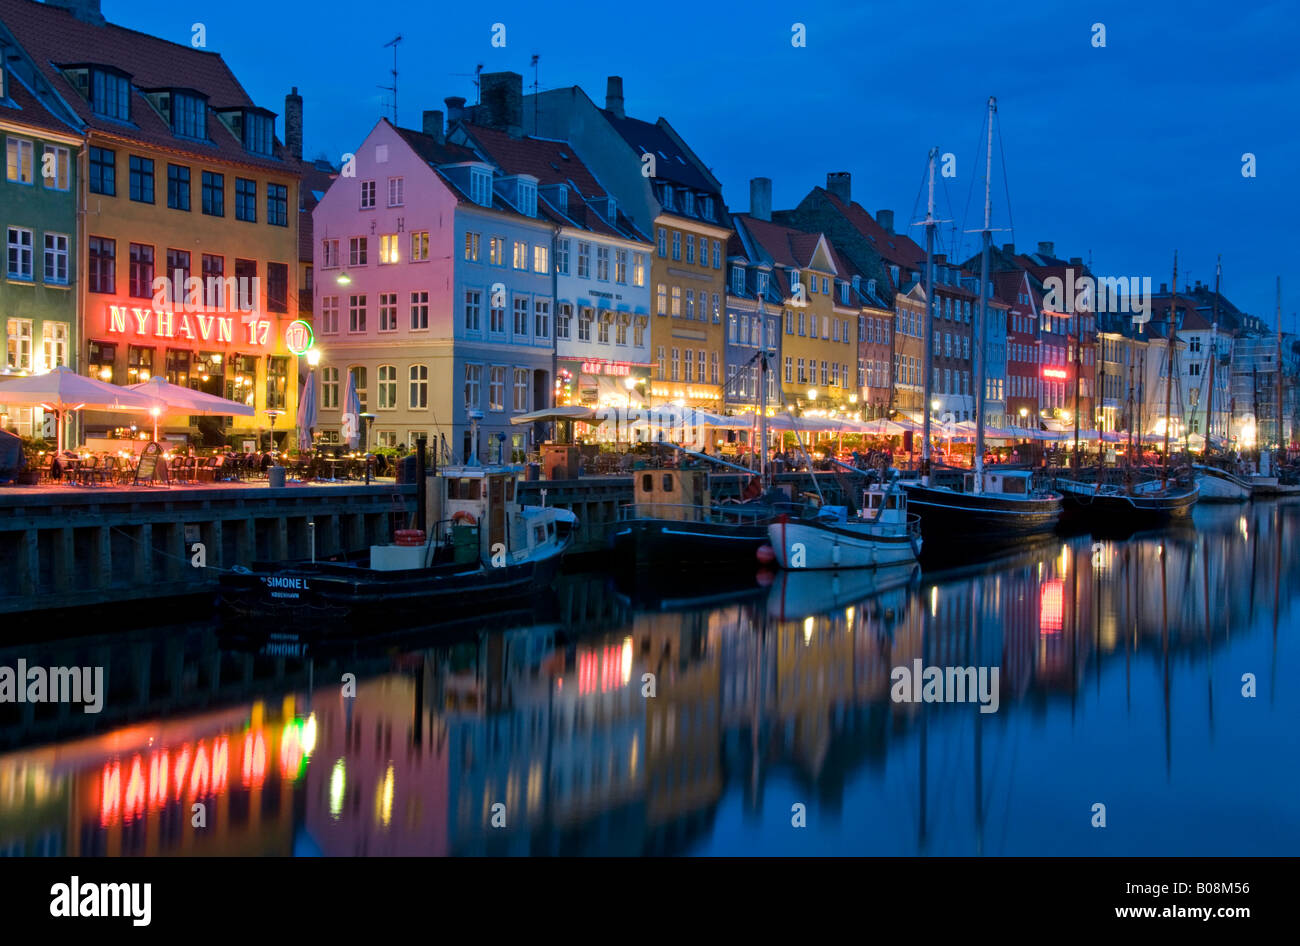 Historic Old Boats Moored Alongside Nyhavn Quayside at Night, Nyhavn ...